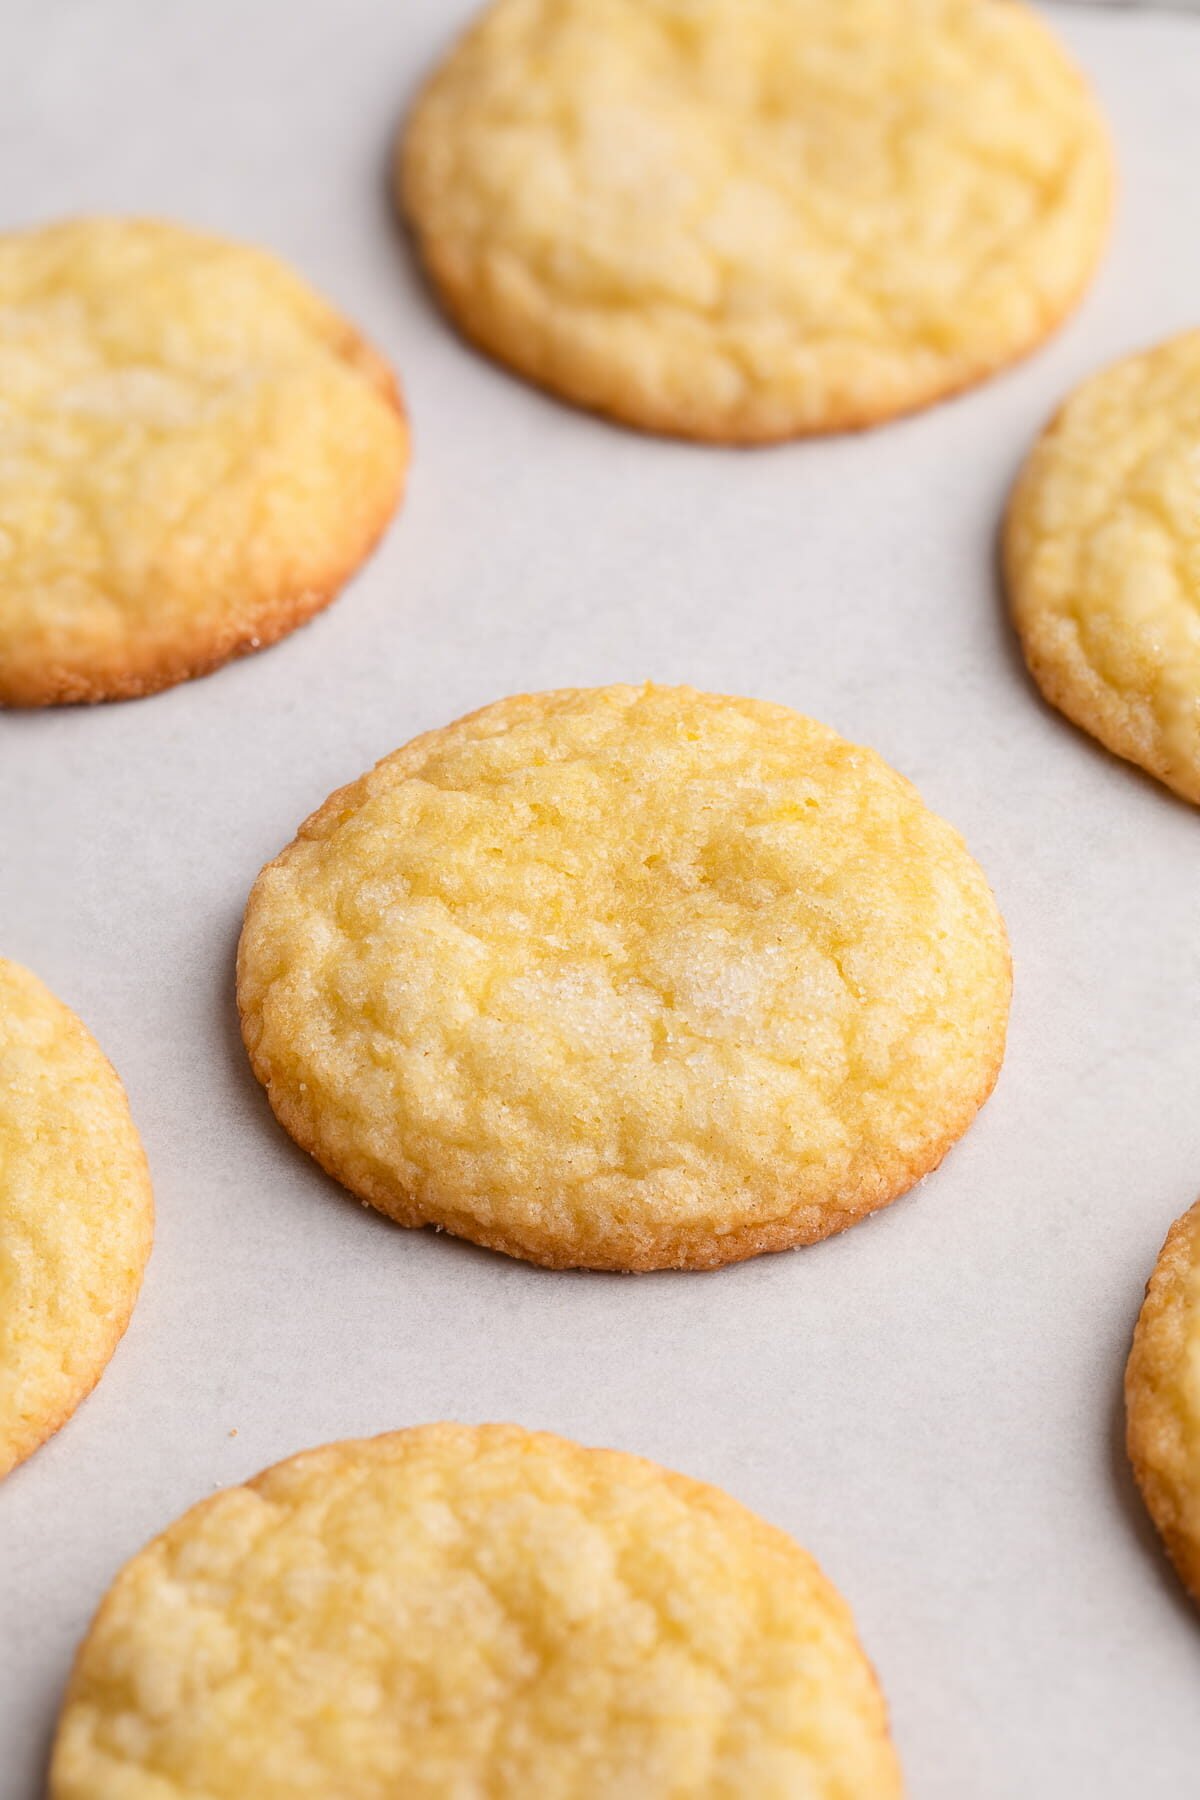 baked soft lemon cookies on baking sheet.